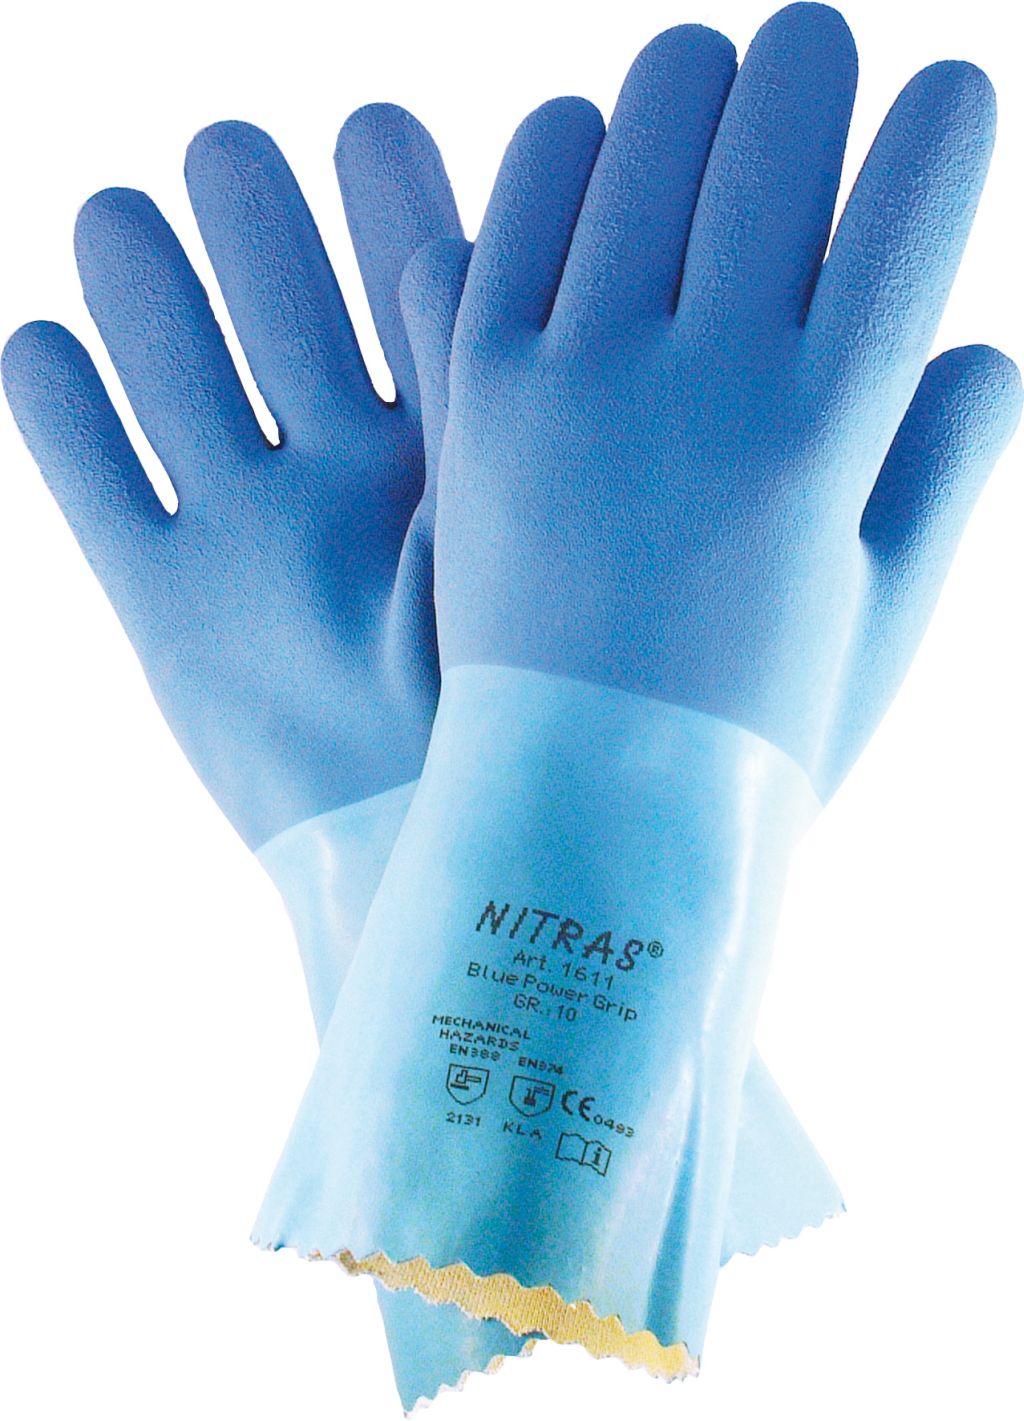 NITRAS Blue Power Grip 1611 Latexhandschuhe, blau, geraute Hand, auf hochwertigem BW-Gewebe